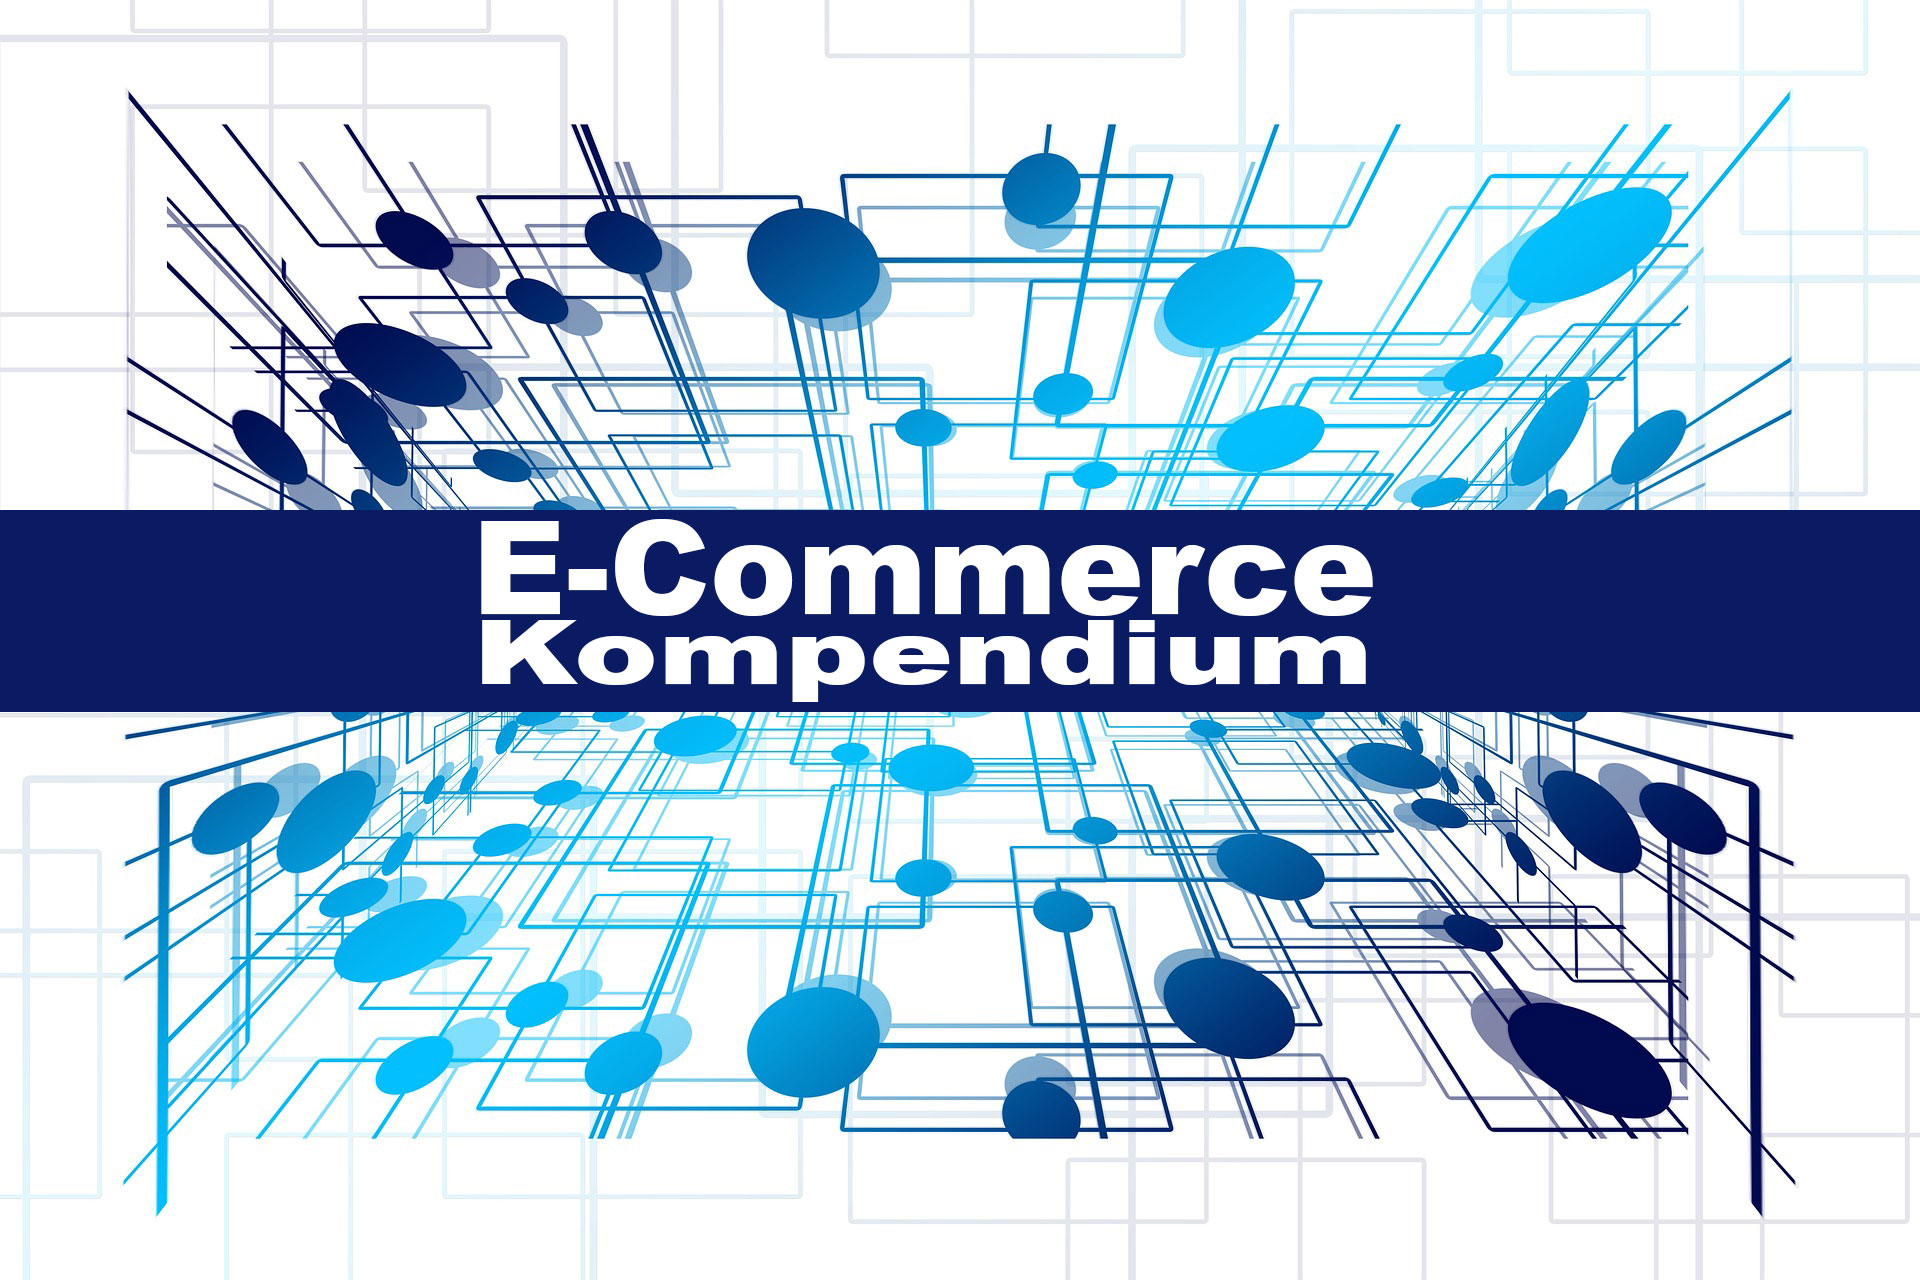 E-Commerce Kompendium - Quelle für E-Commerce Informationen